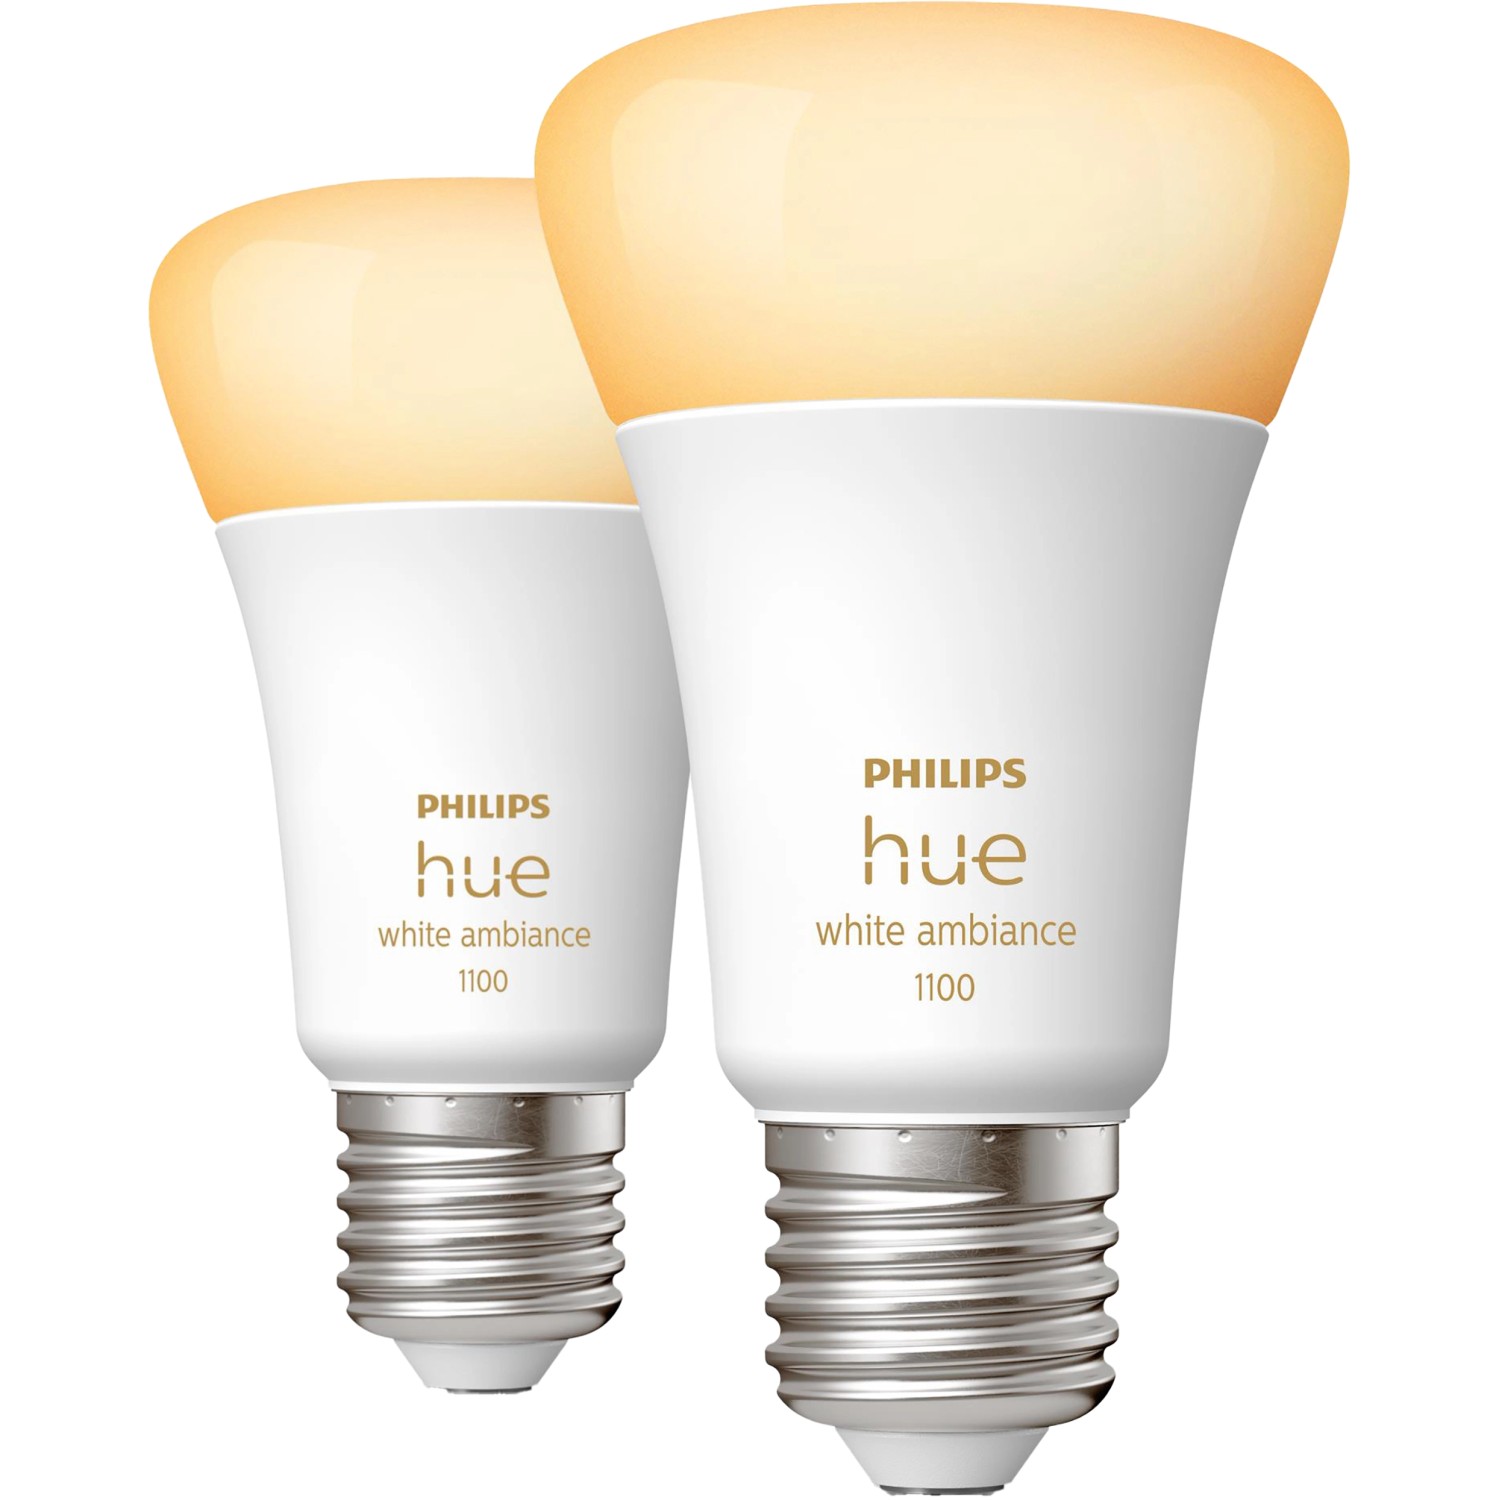 Hue OBI Philips kaufen bei LED online